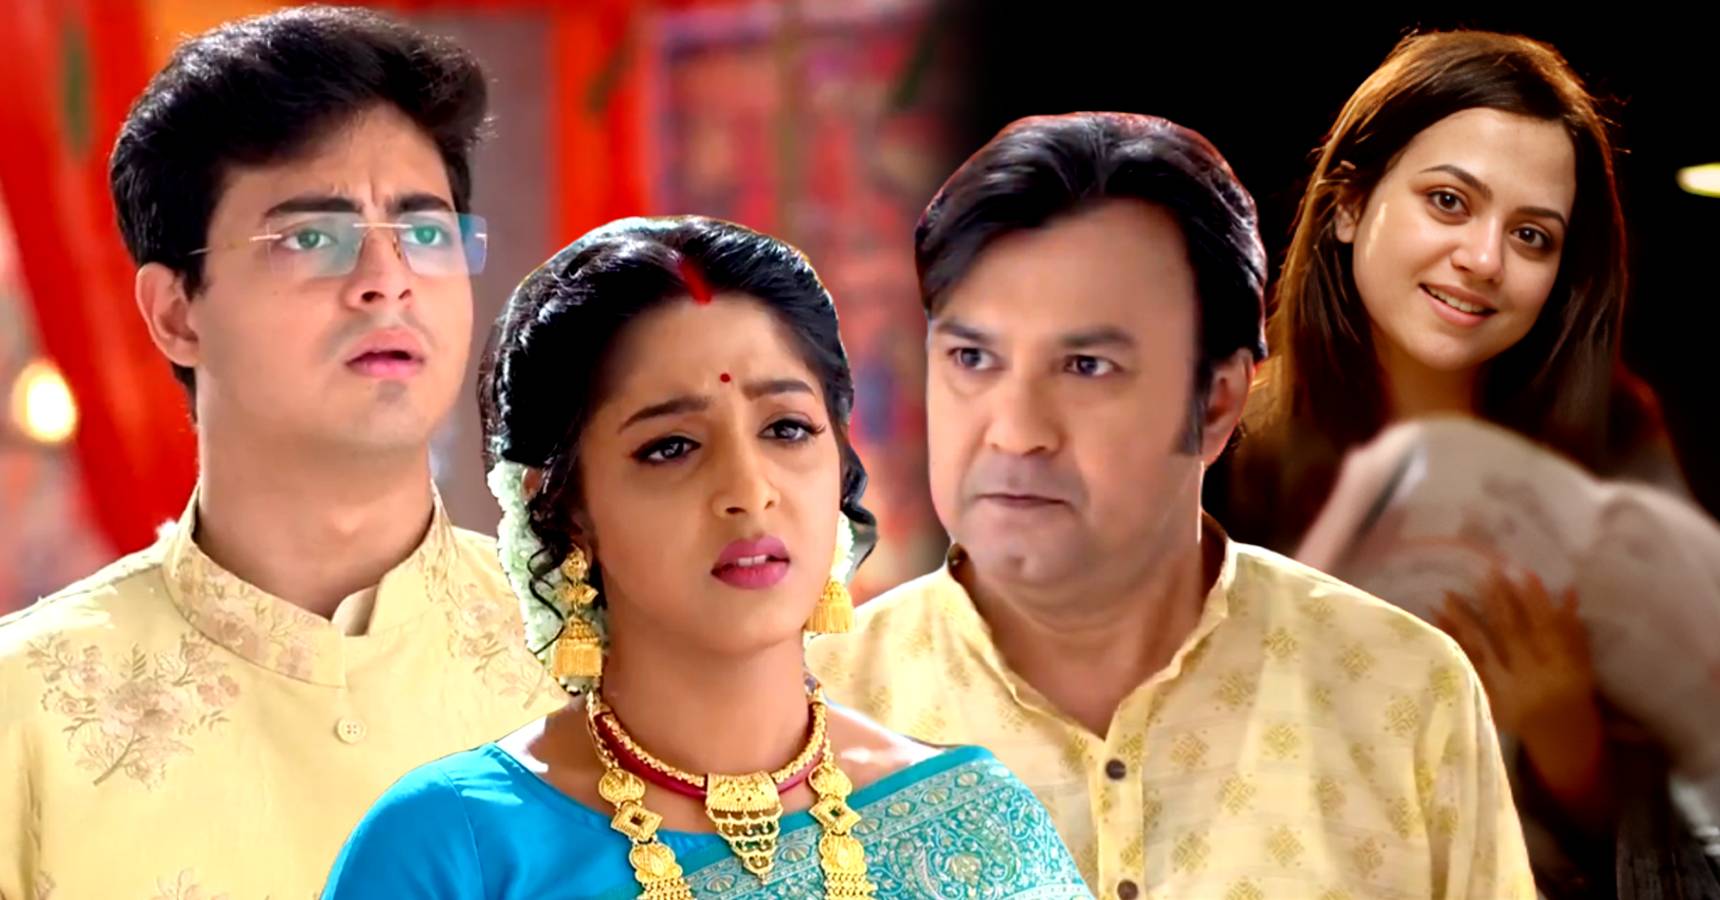 Star Jalsha Bengali serial Anurager Chhowa Mishka again creates trouble in Surjya Deepa’s life